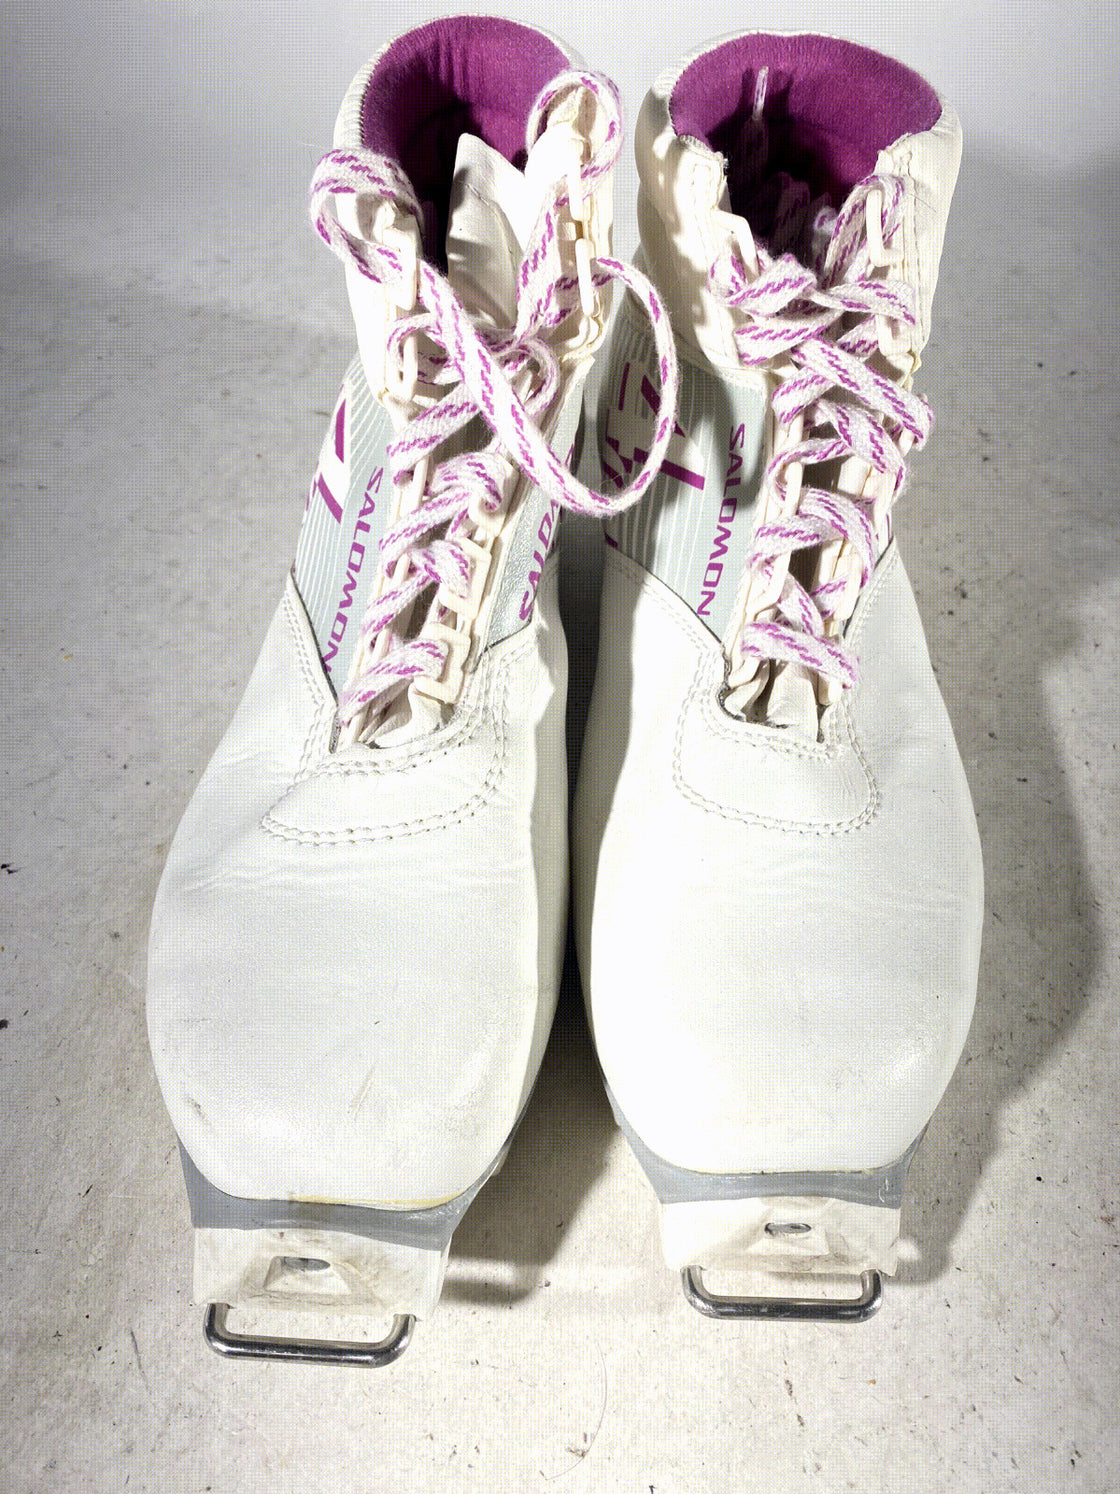 SALOMON Vintage Nordic Cross Country Ski Boots Size EU40 US7.5 SNS Old Bindings